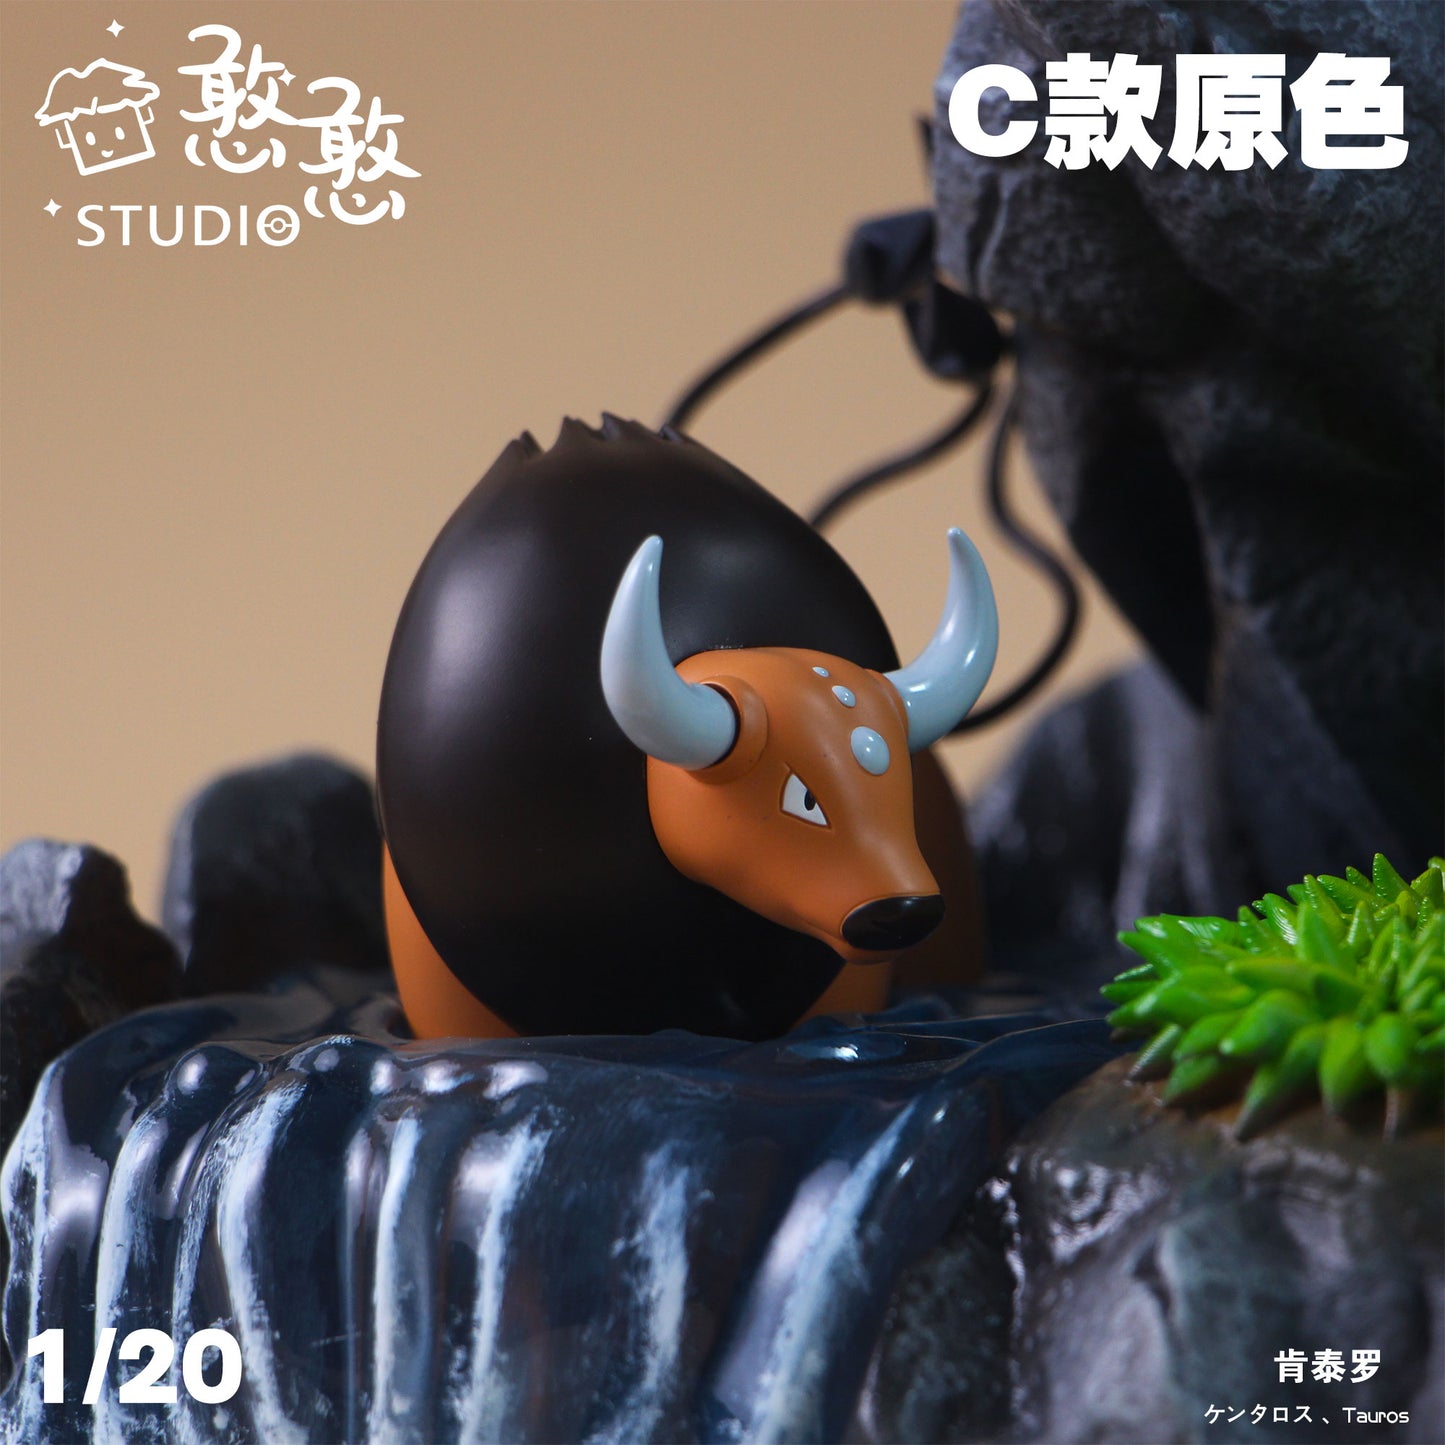 〖Make Up The Balance〗Pokemon Scale World Tauros #128 1:20 - HH Studio